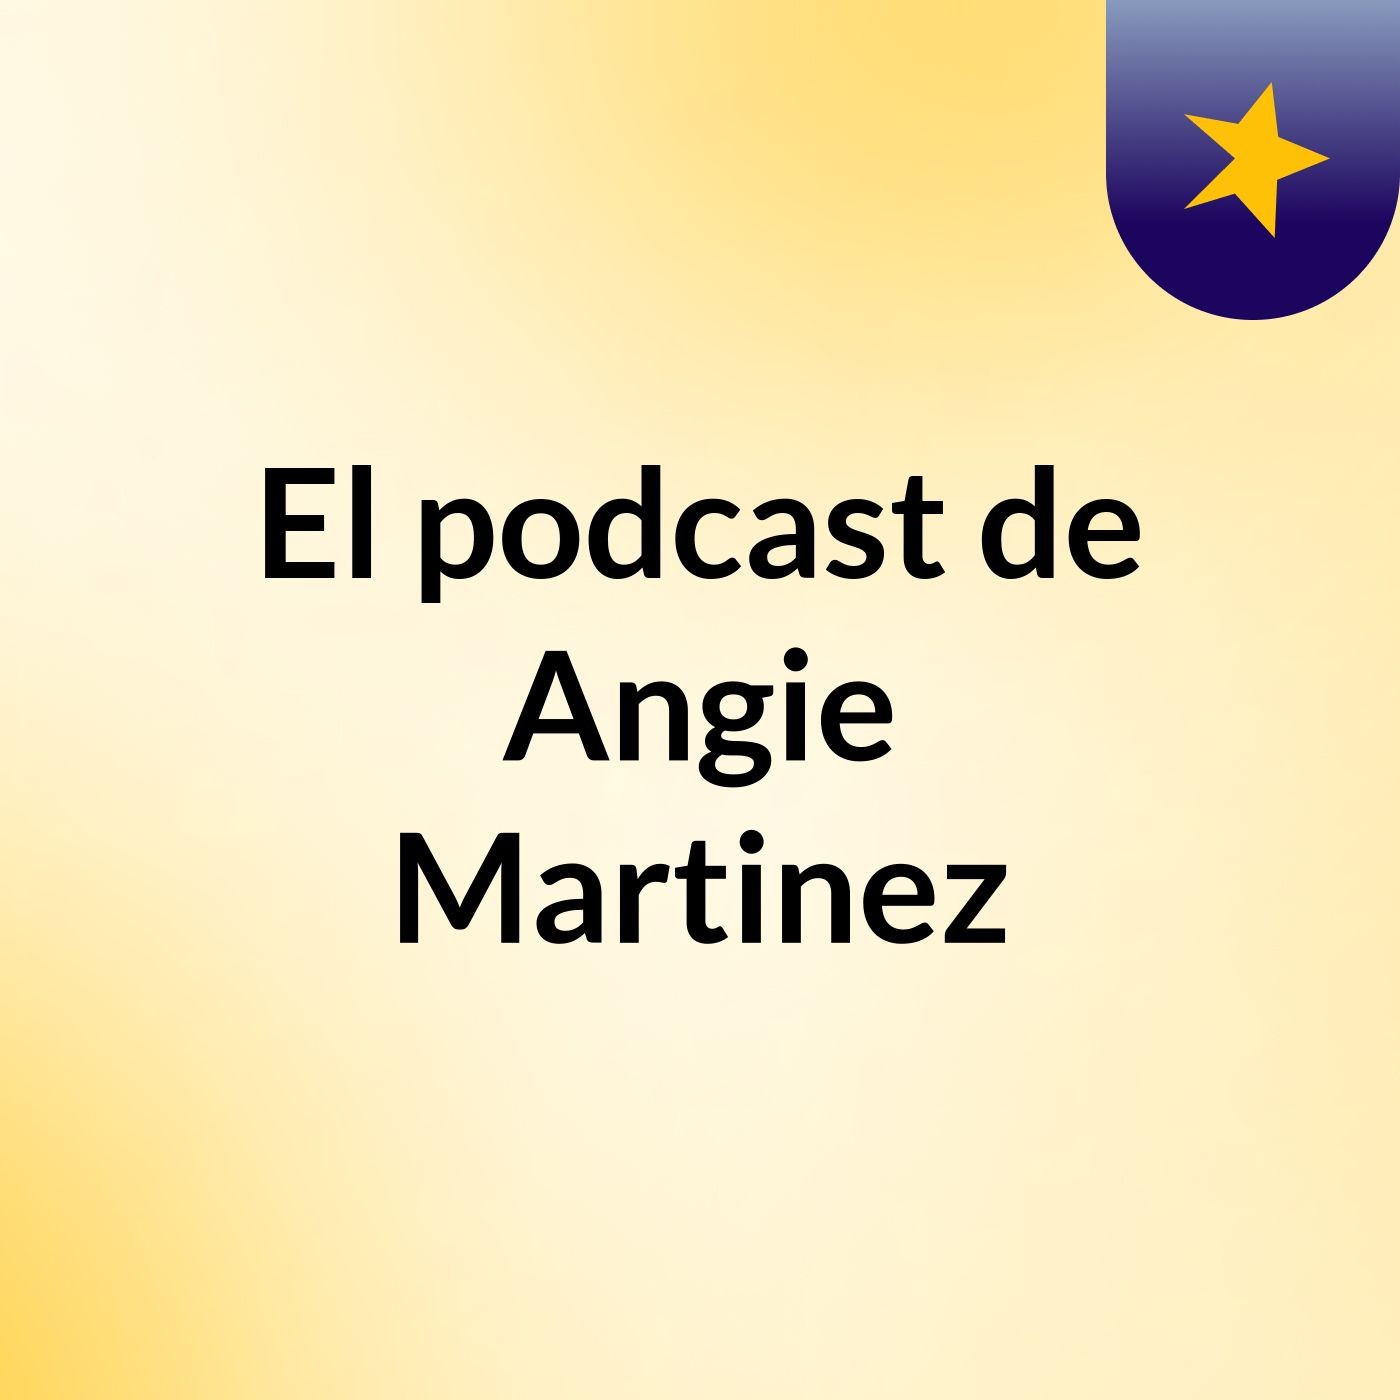 El podcast de Angie Martinez